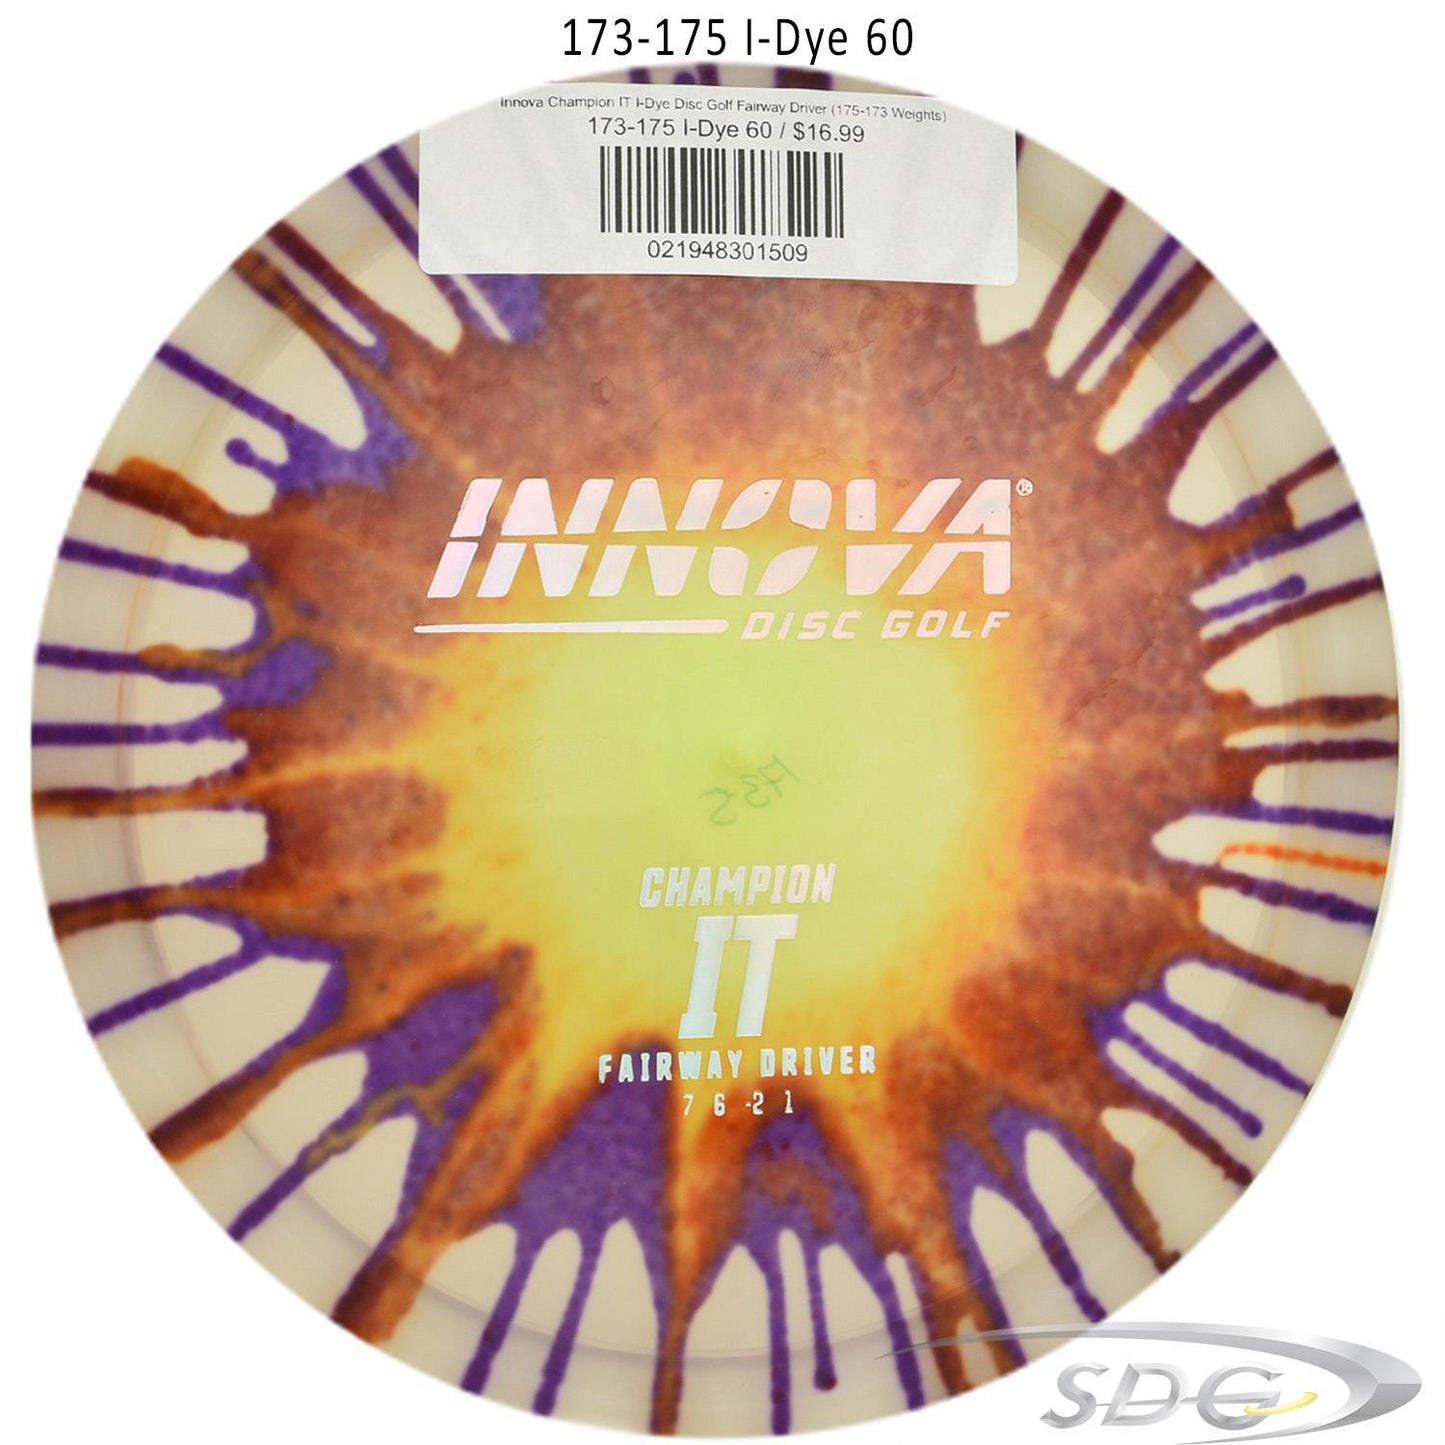 innova-champion-it-i-dye-disc-golf-fairway-driver 173-175 I-Dye 60 